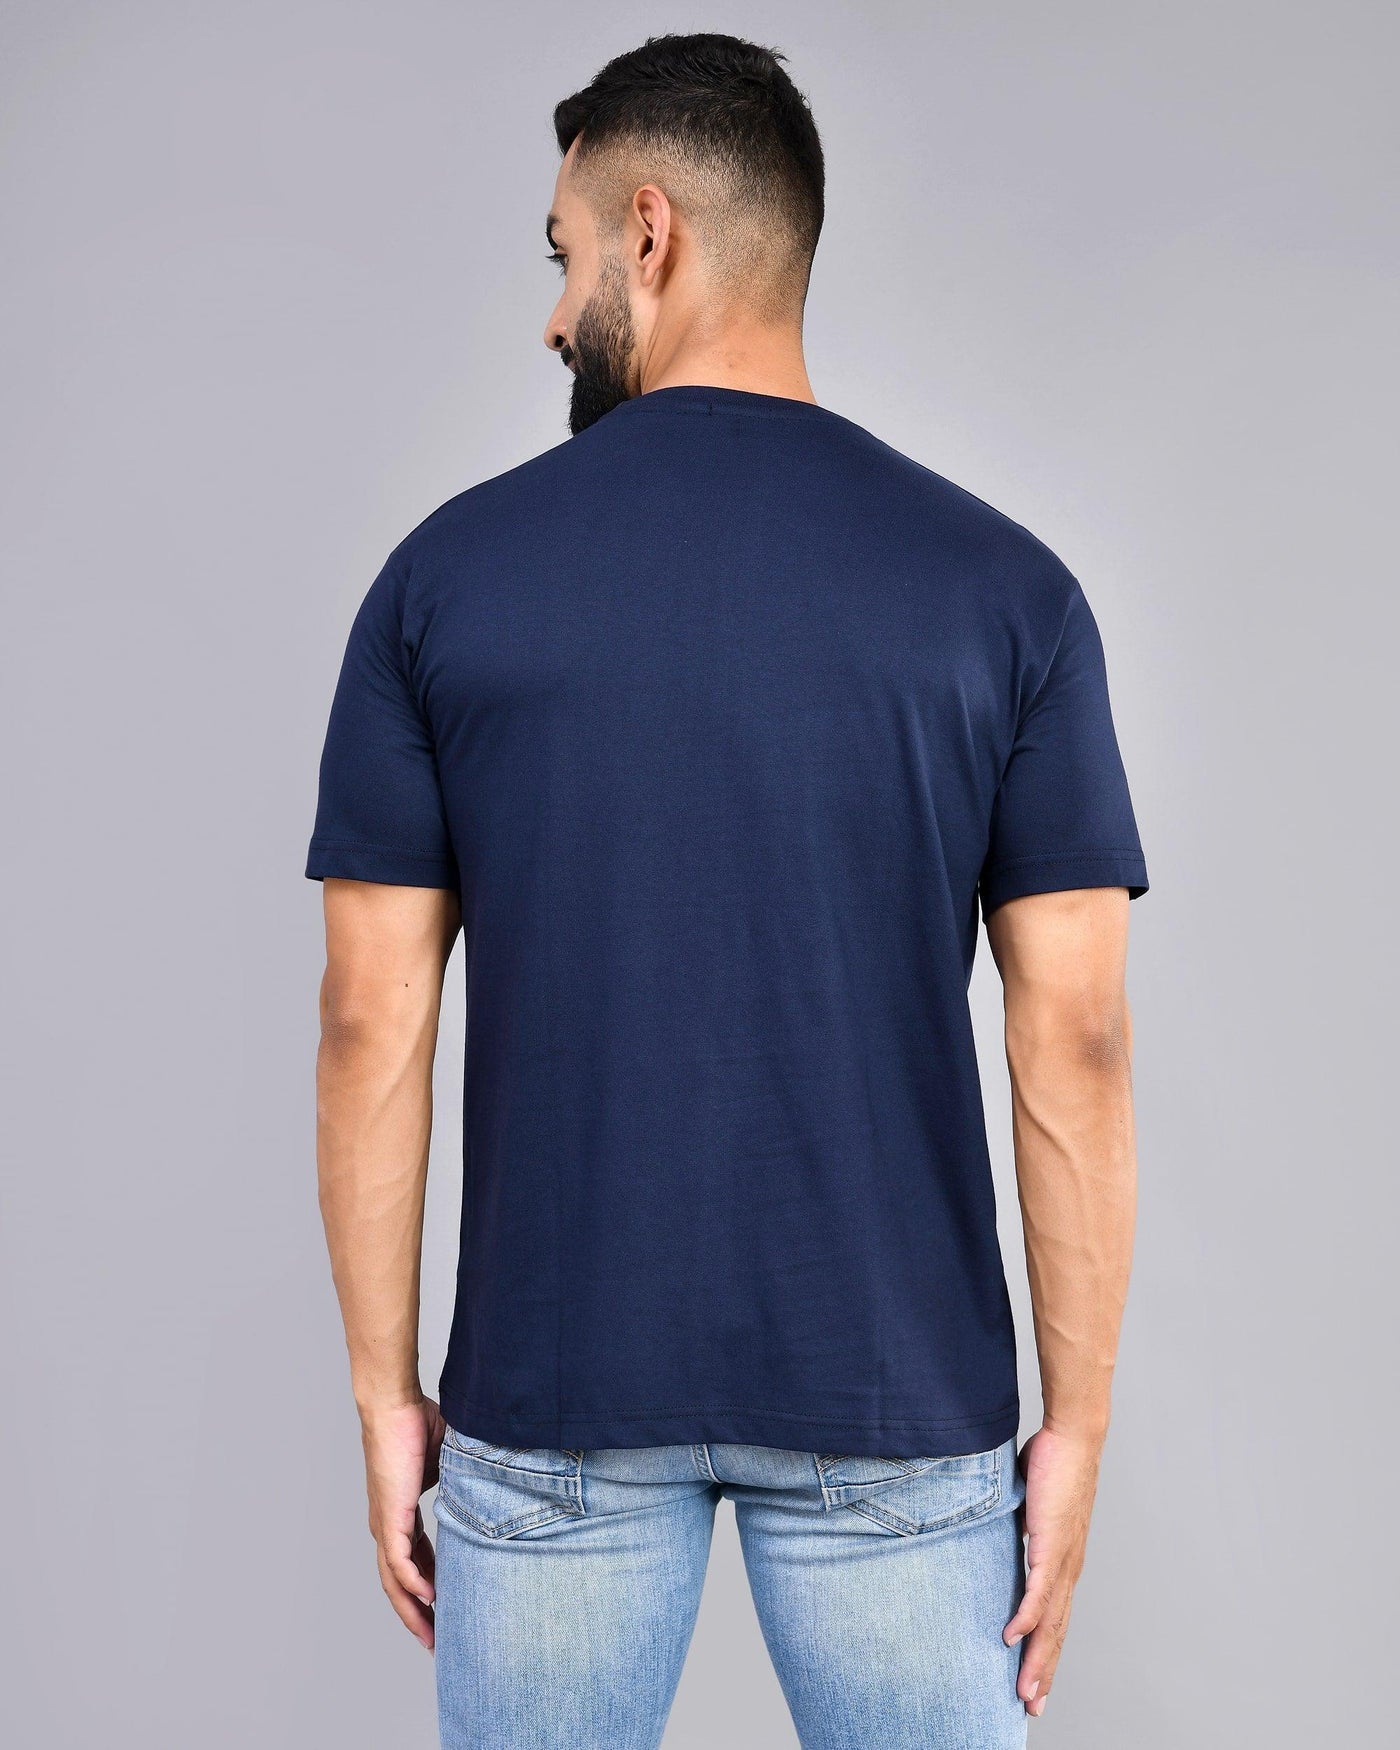 blue printed t shirt